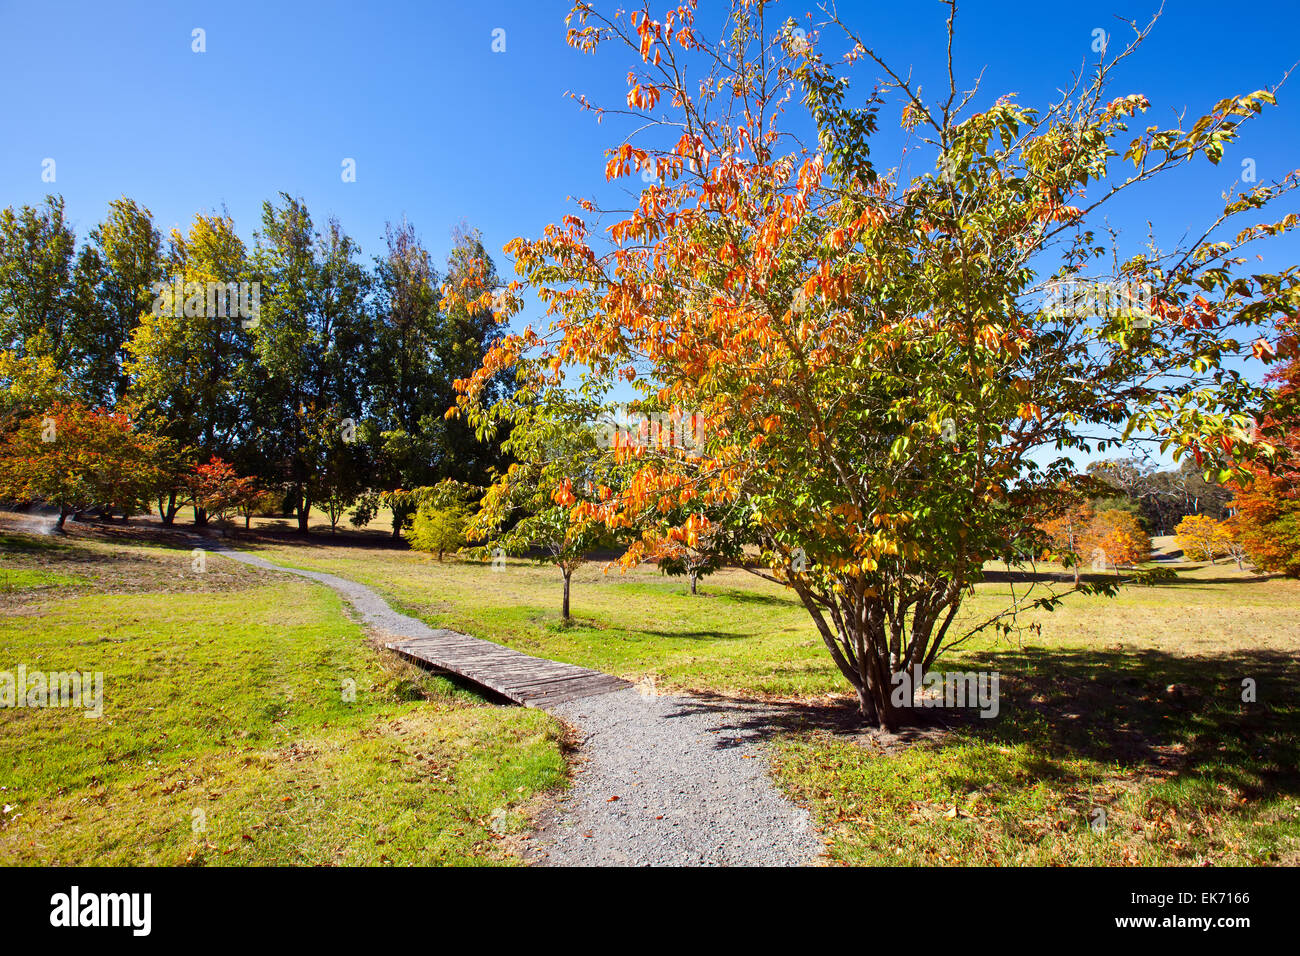 Mt hohen botanischen Garten Adelaide Hills South Australia australischen Landschaft Landschaften Herbst Stockfoto